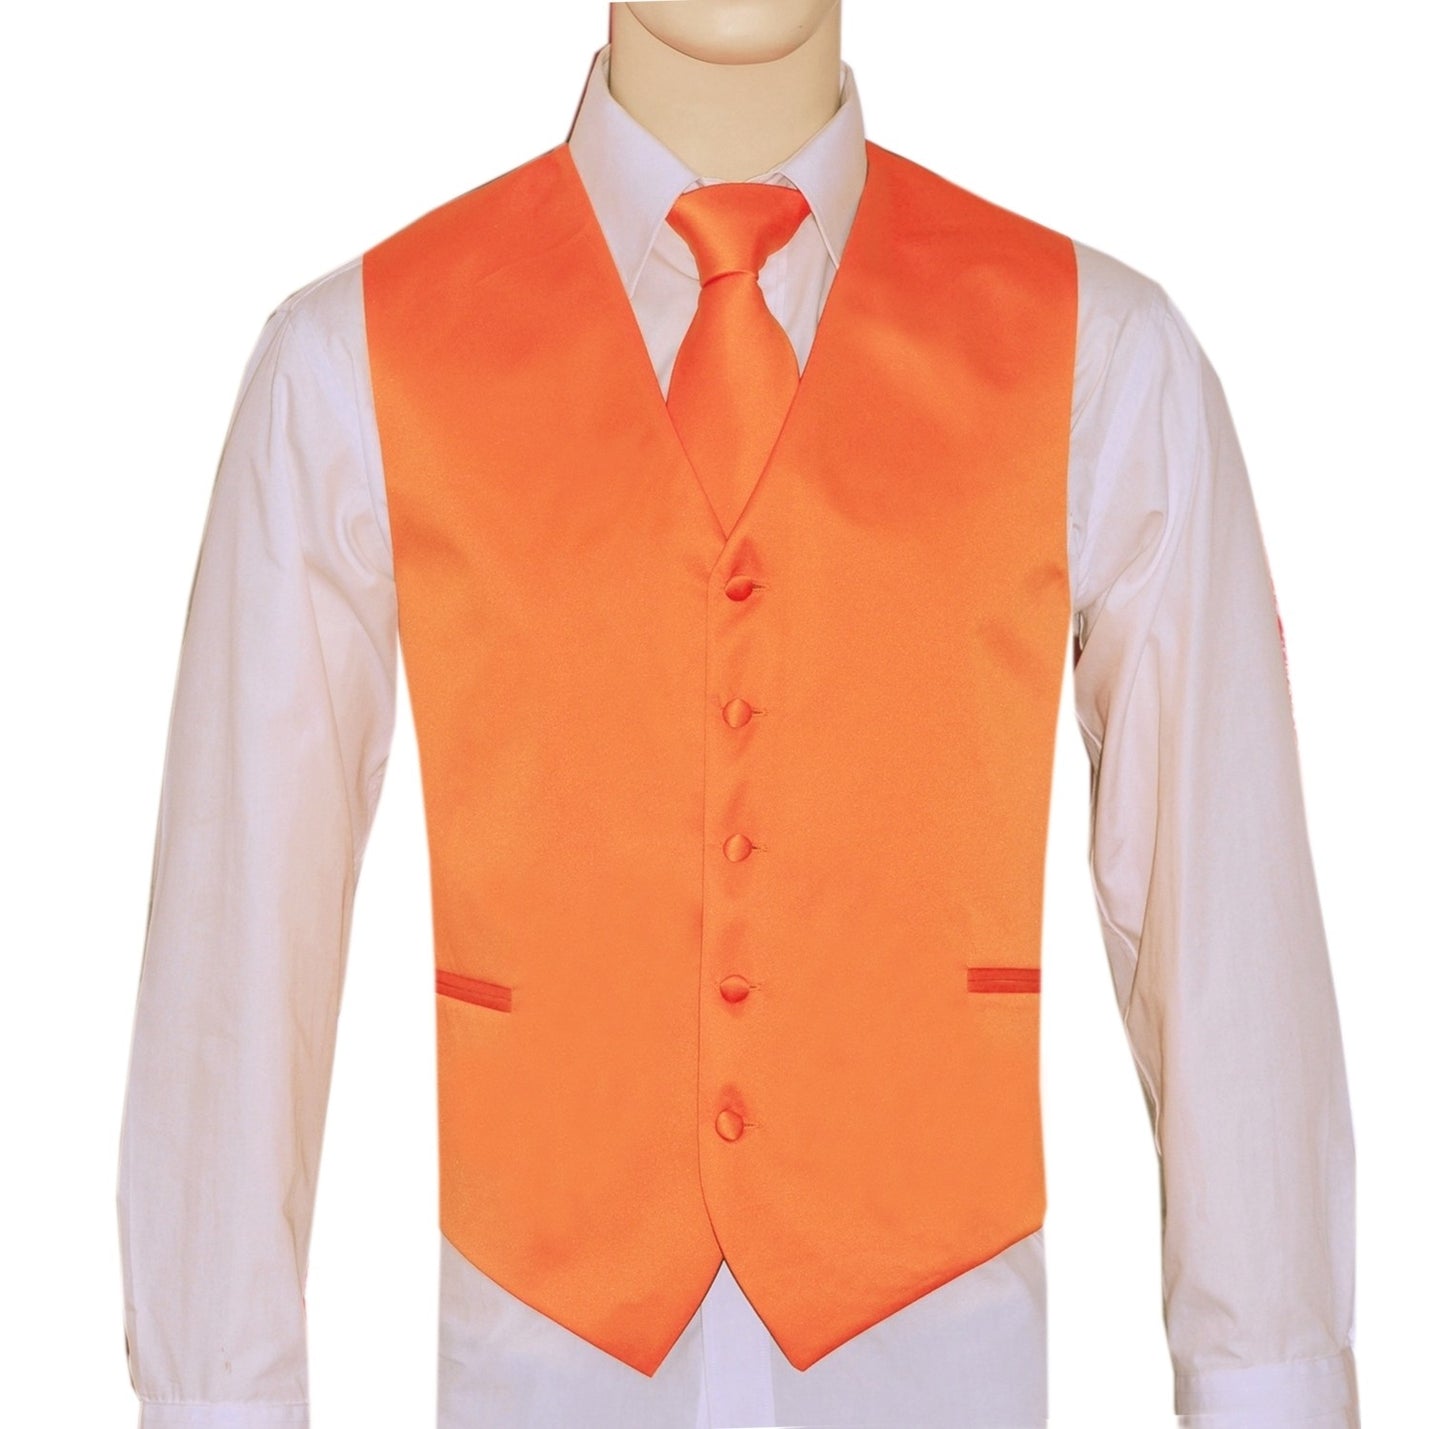 KCT Menswear Orange Vest and Tie Set, formal vest and tie set, groom and groomsmen vest and tie set, solid color vest and tie set, formal wear vest and tie set, special occasion vest and tie set.